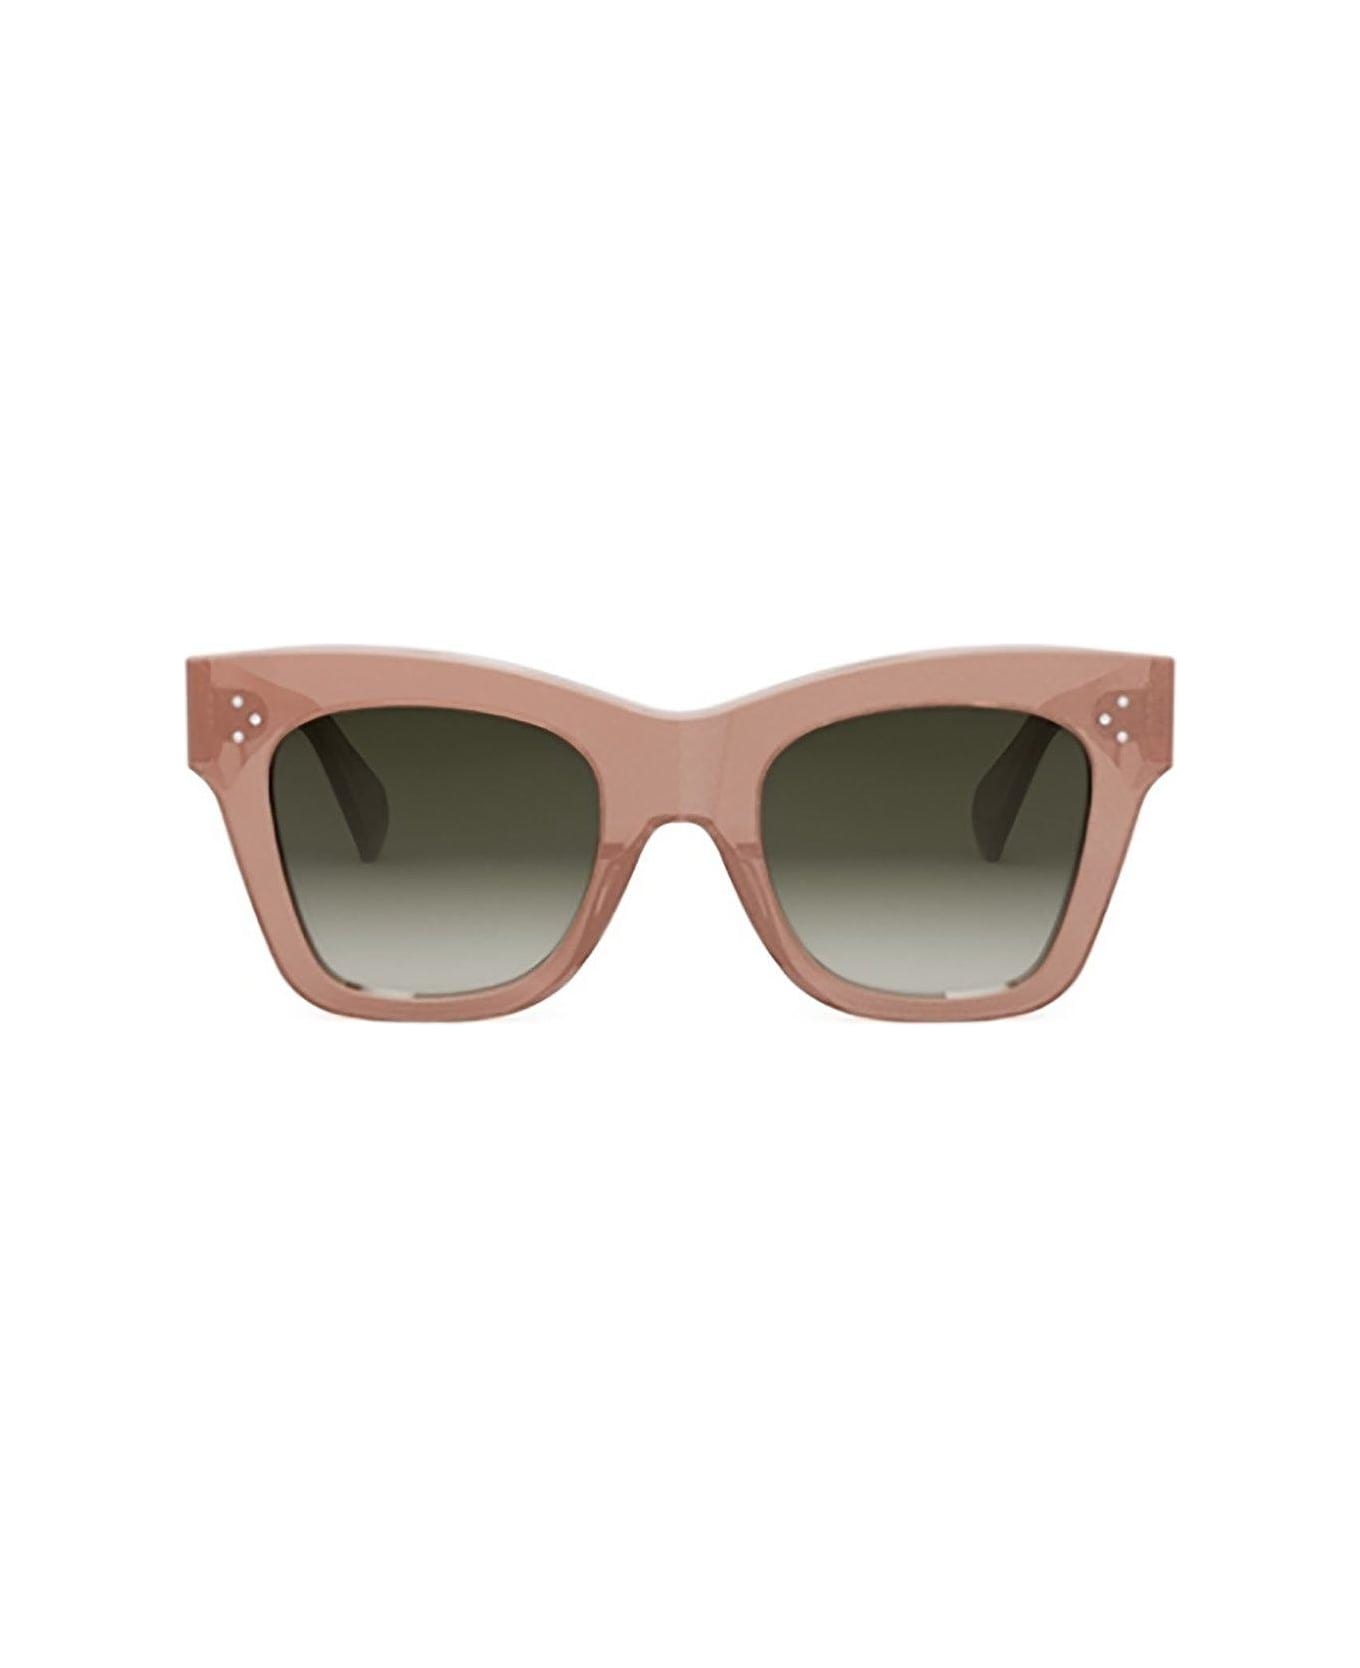 Celine Square Frame Sunglasses - 74f